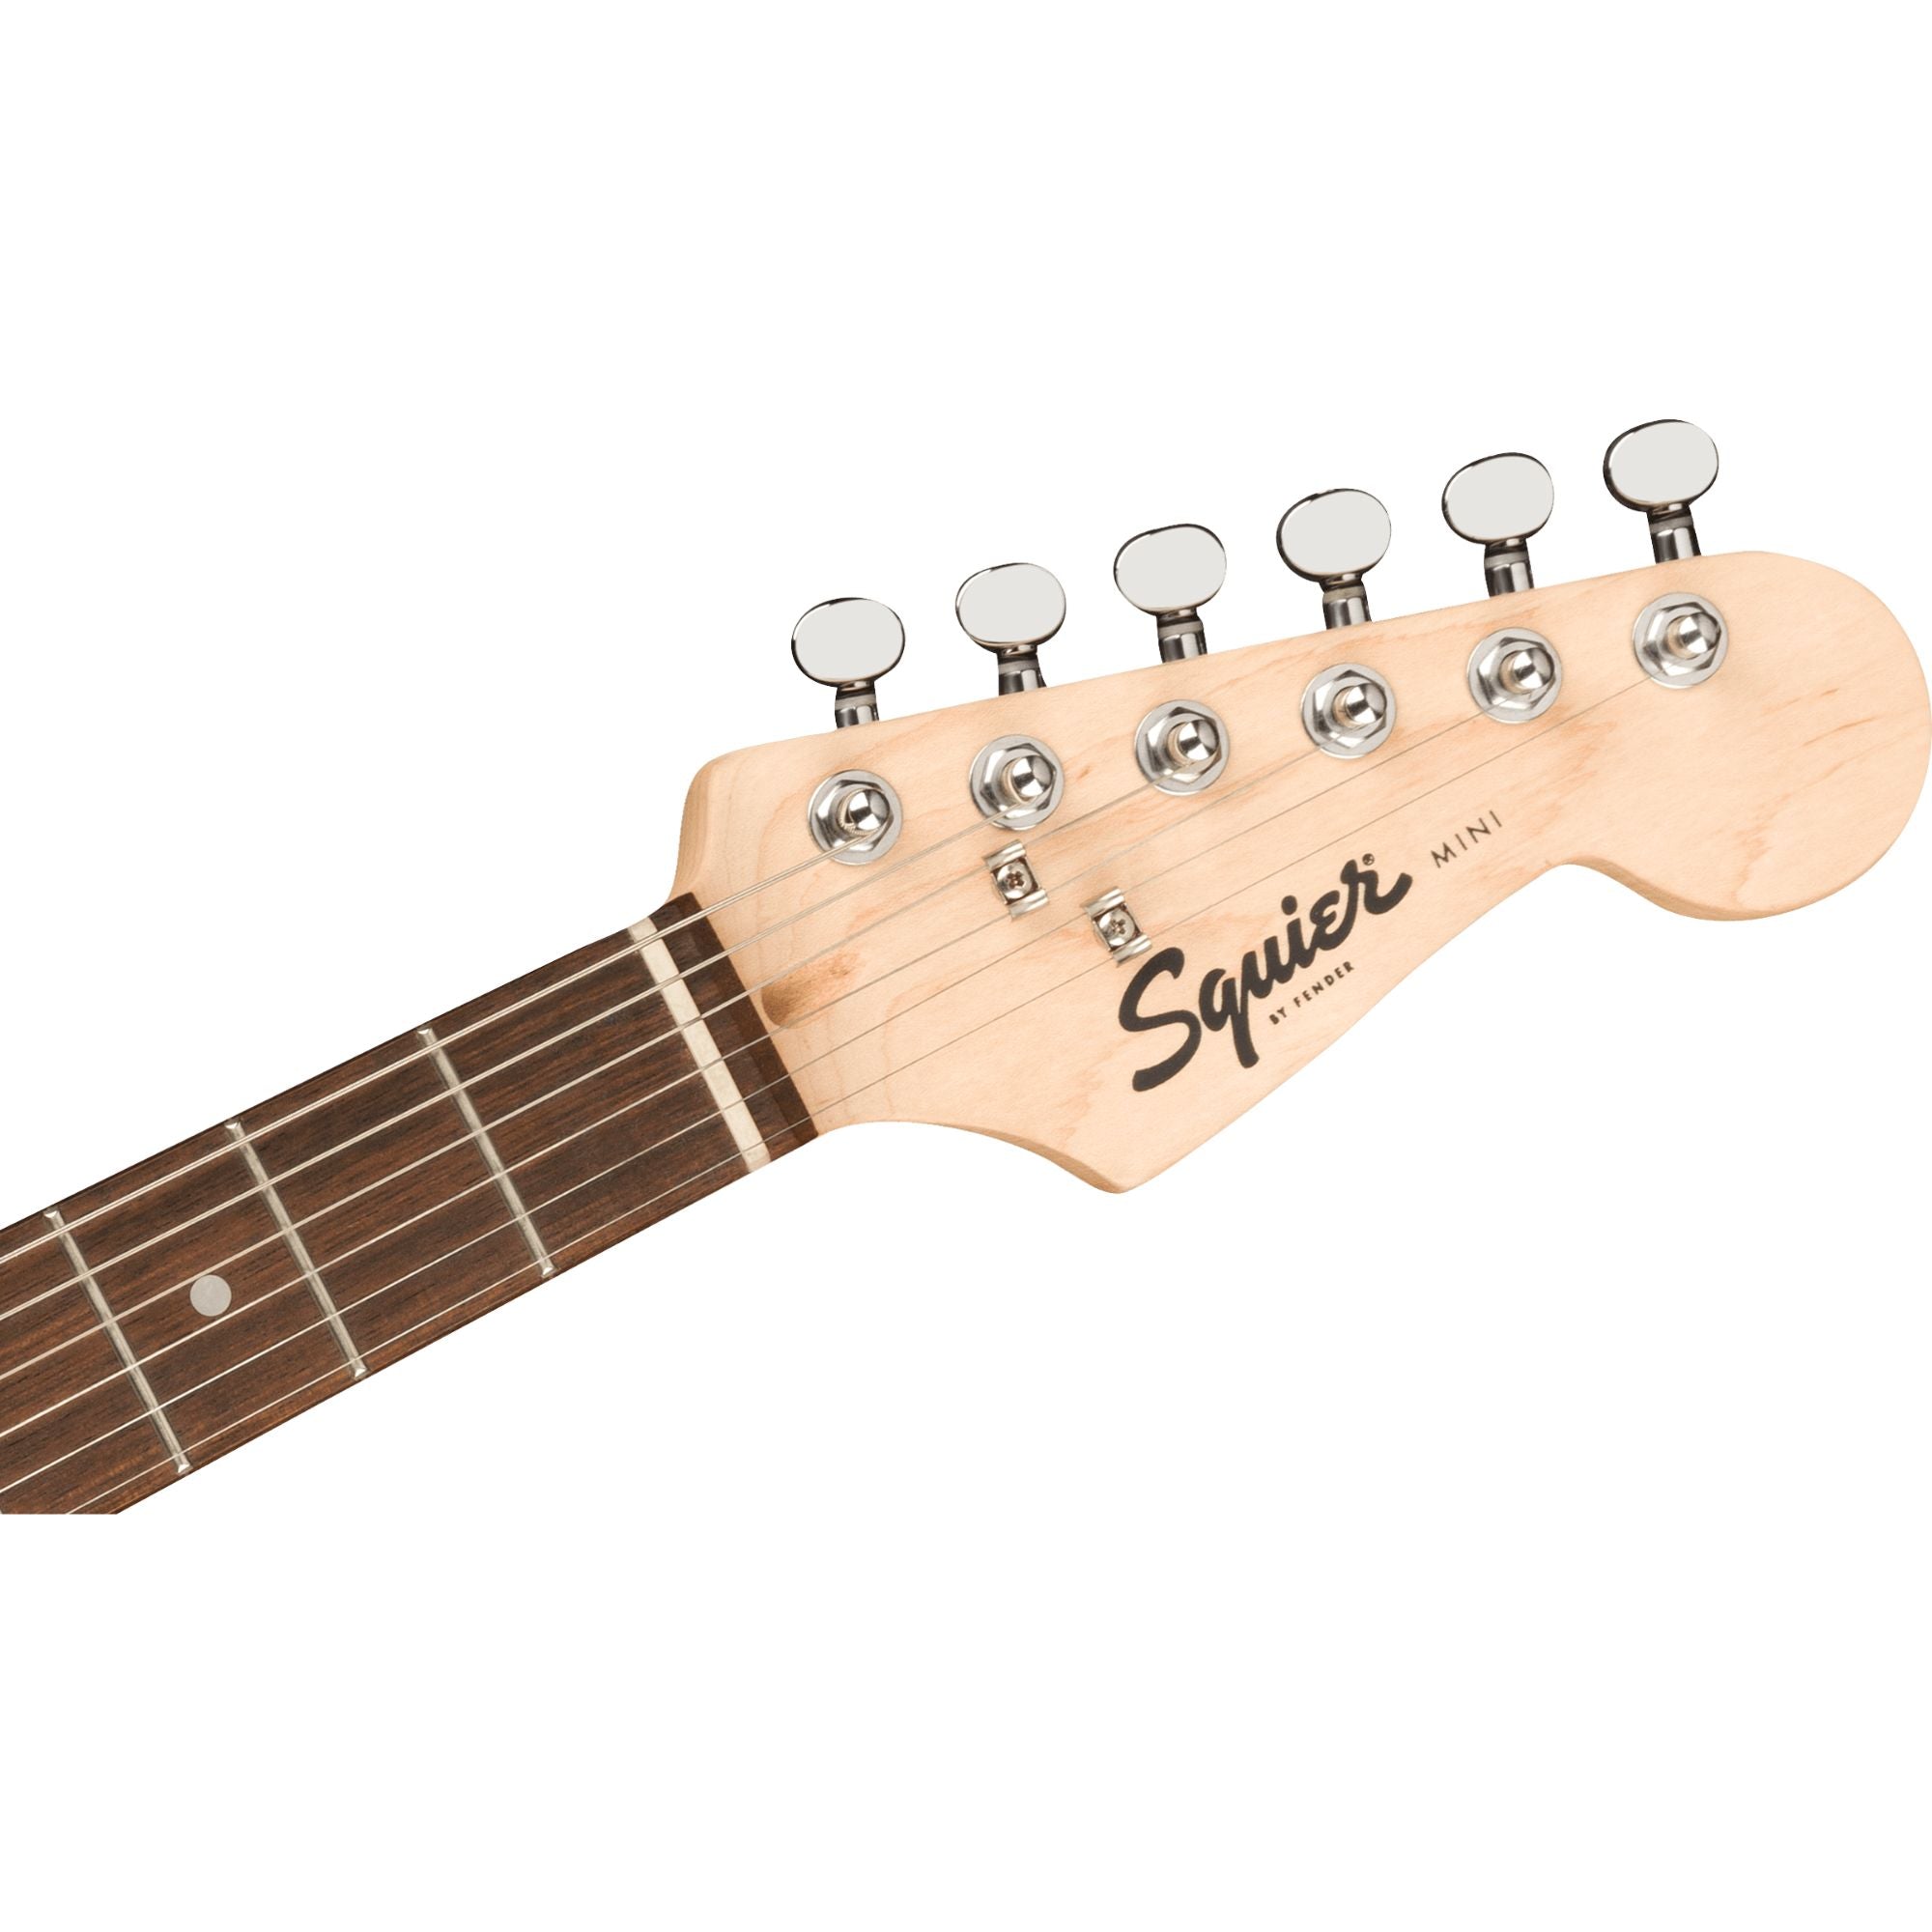 Squier Mini Stratocaster, Dakota Red